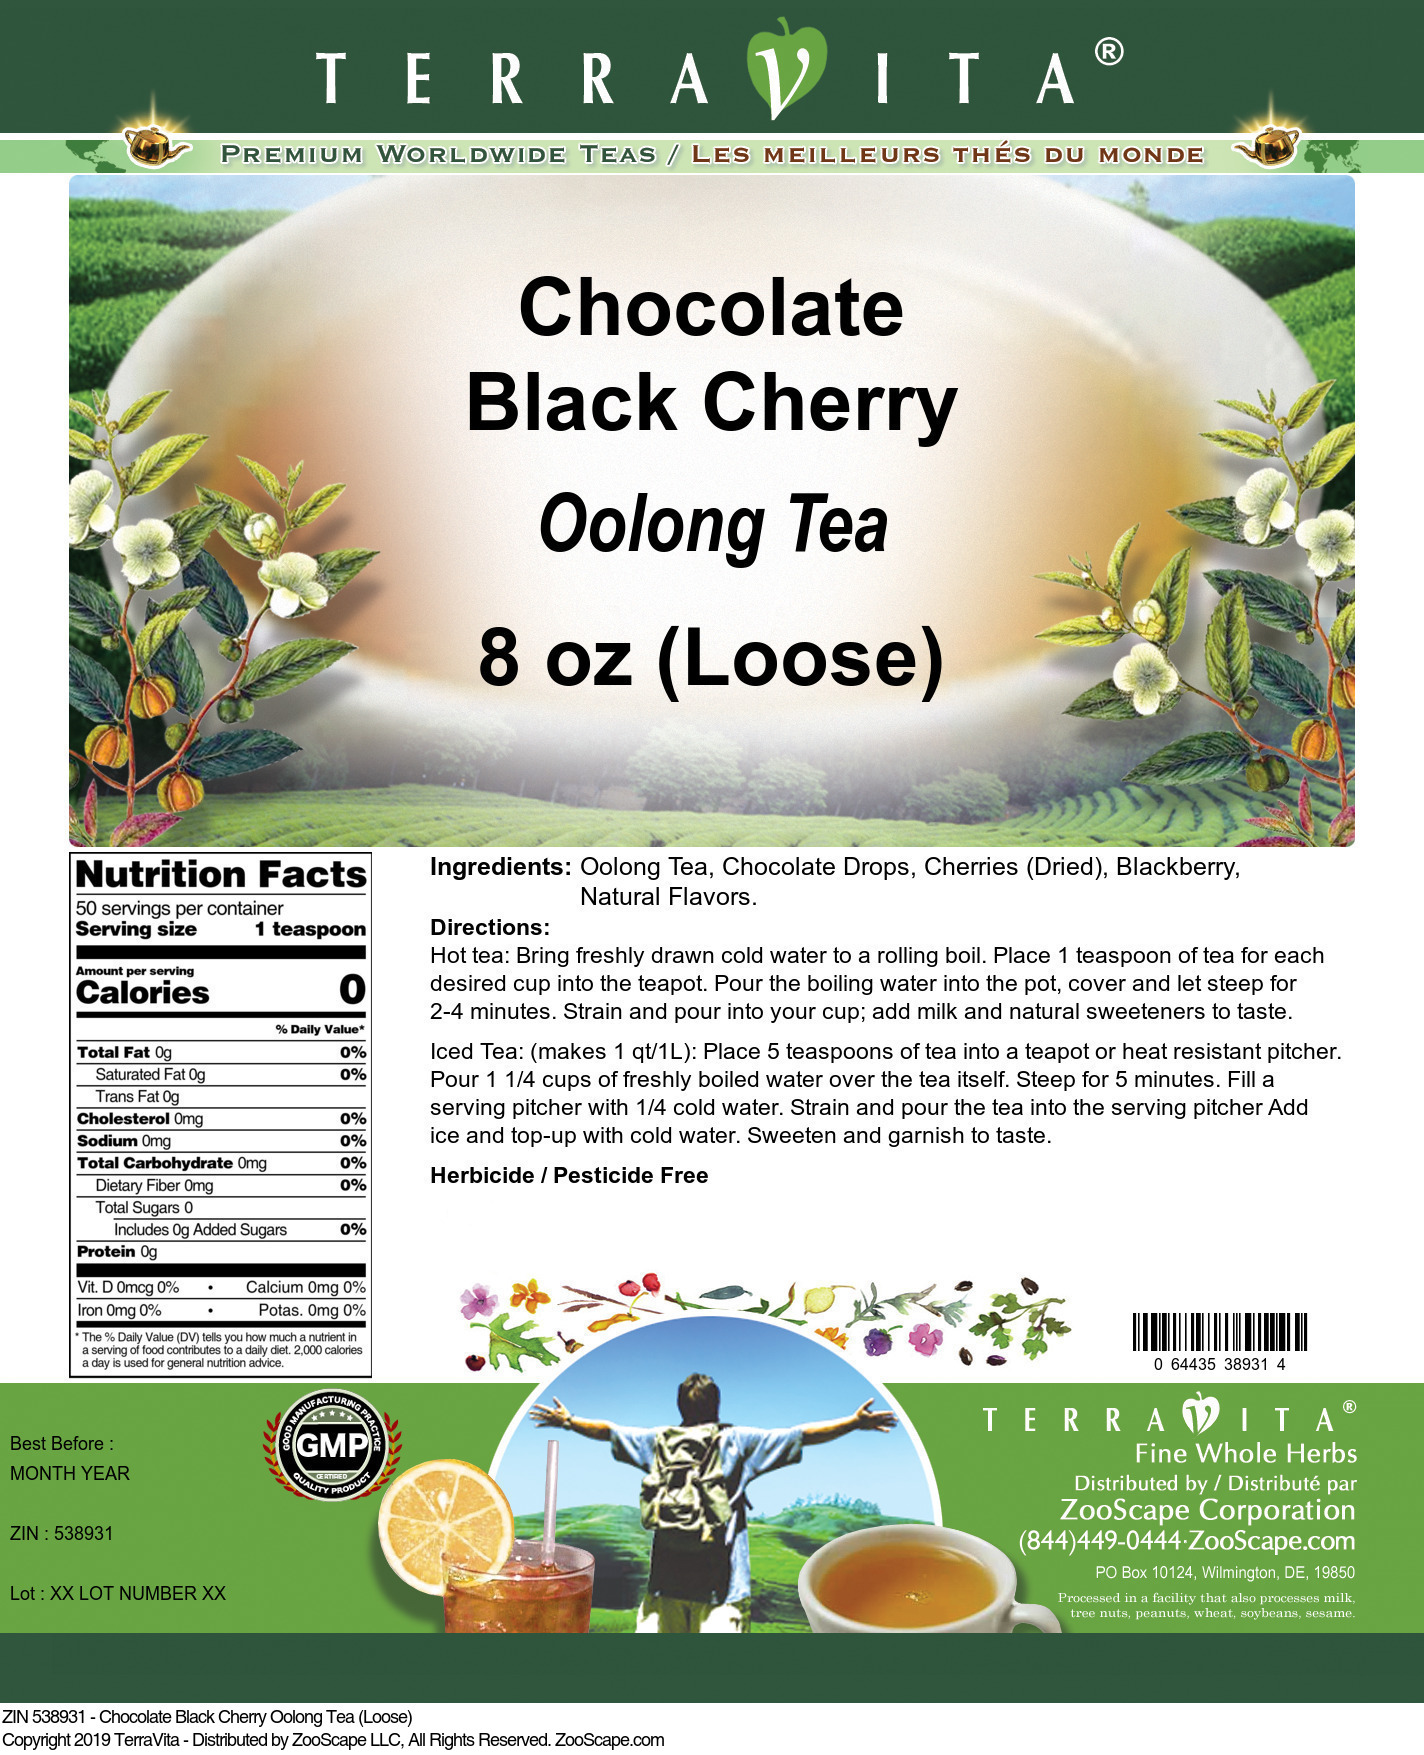 Chocolate Black Cherry Oolong Tea (Loose) - Label